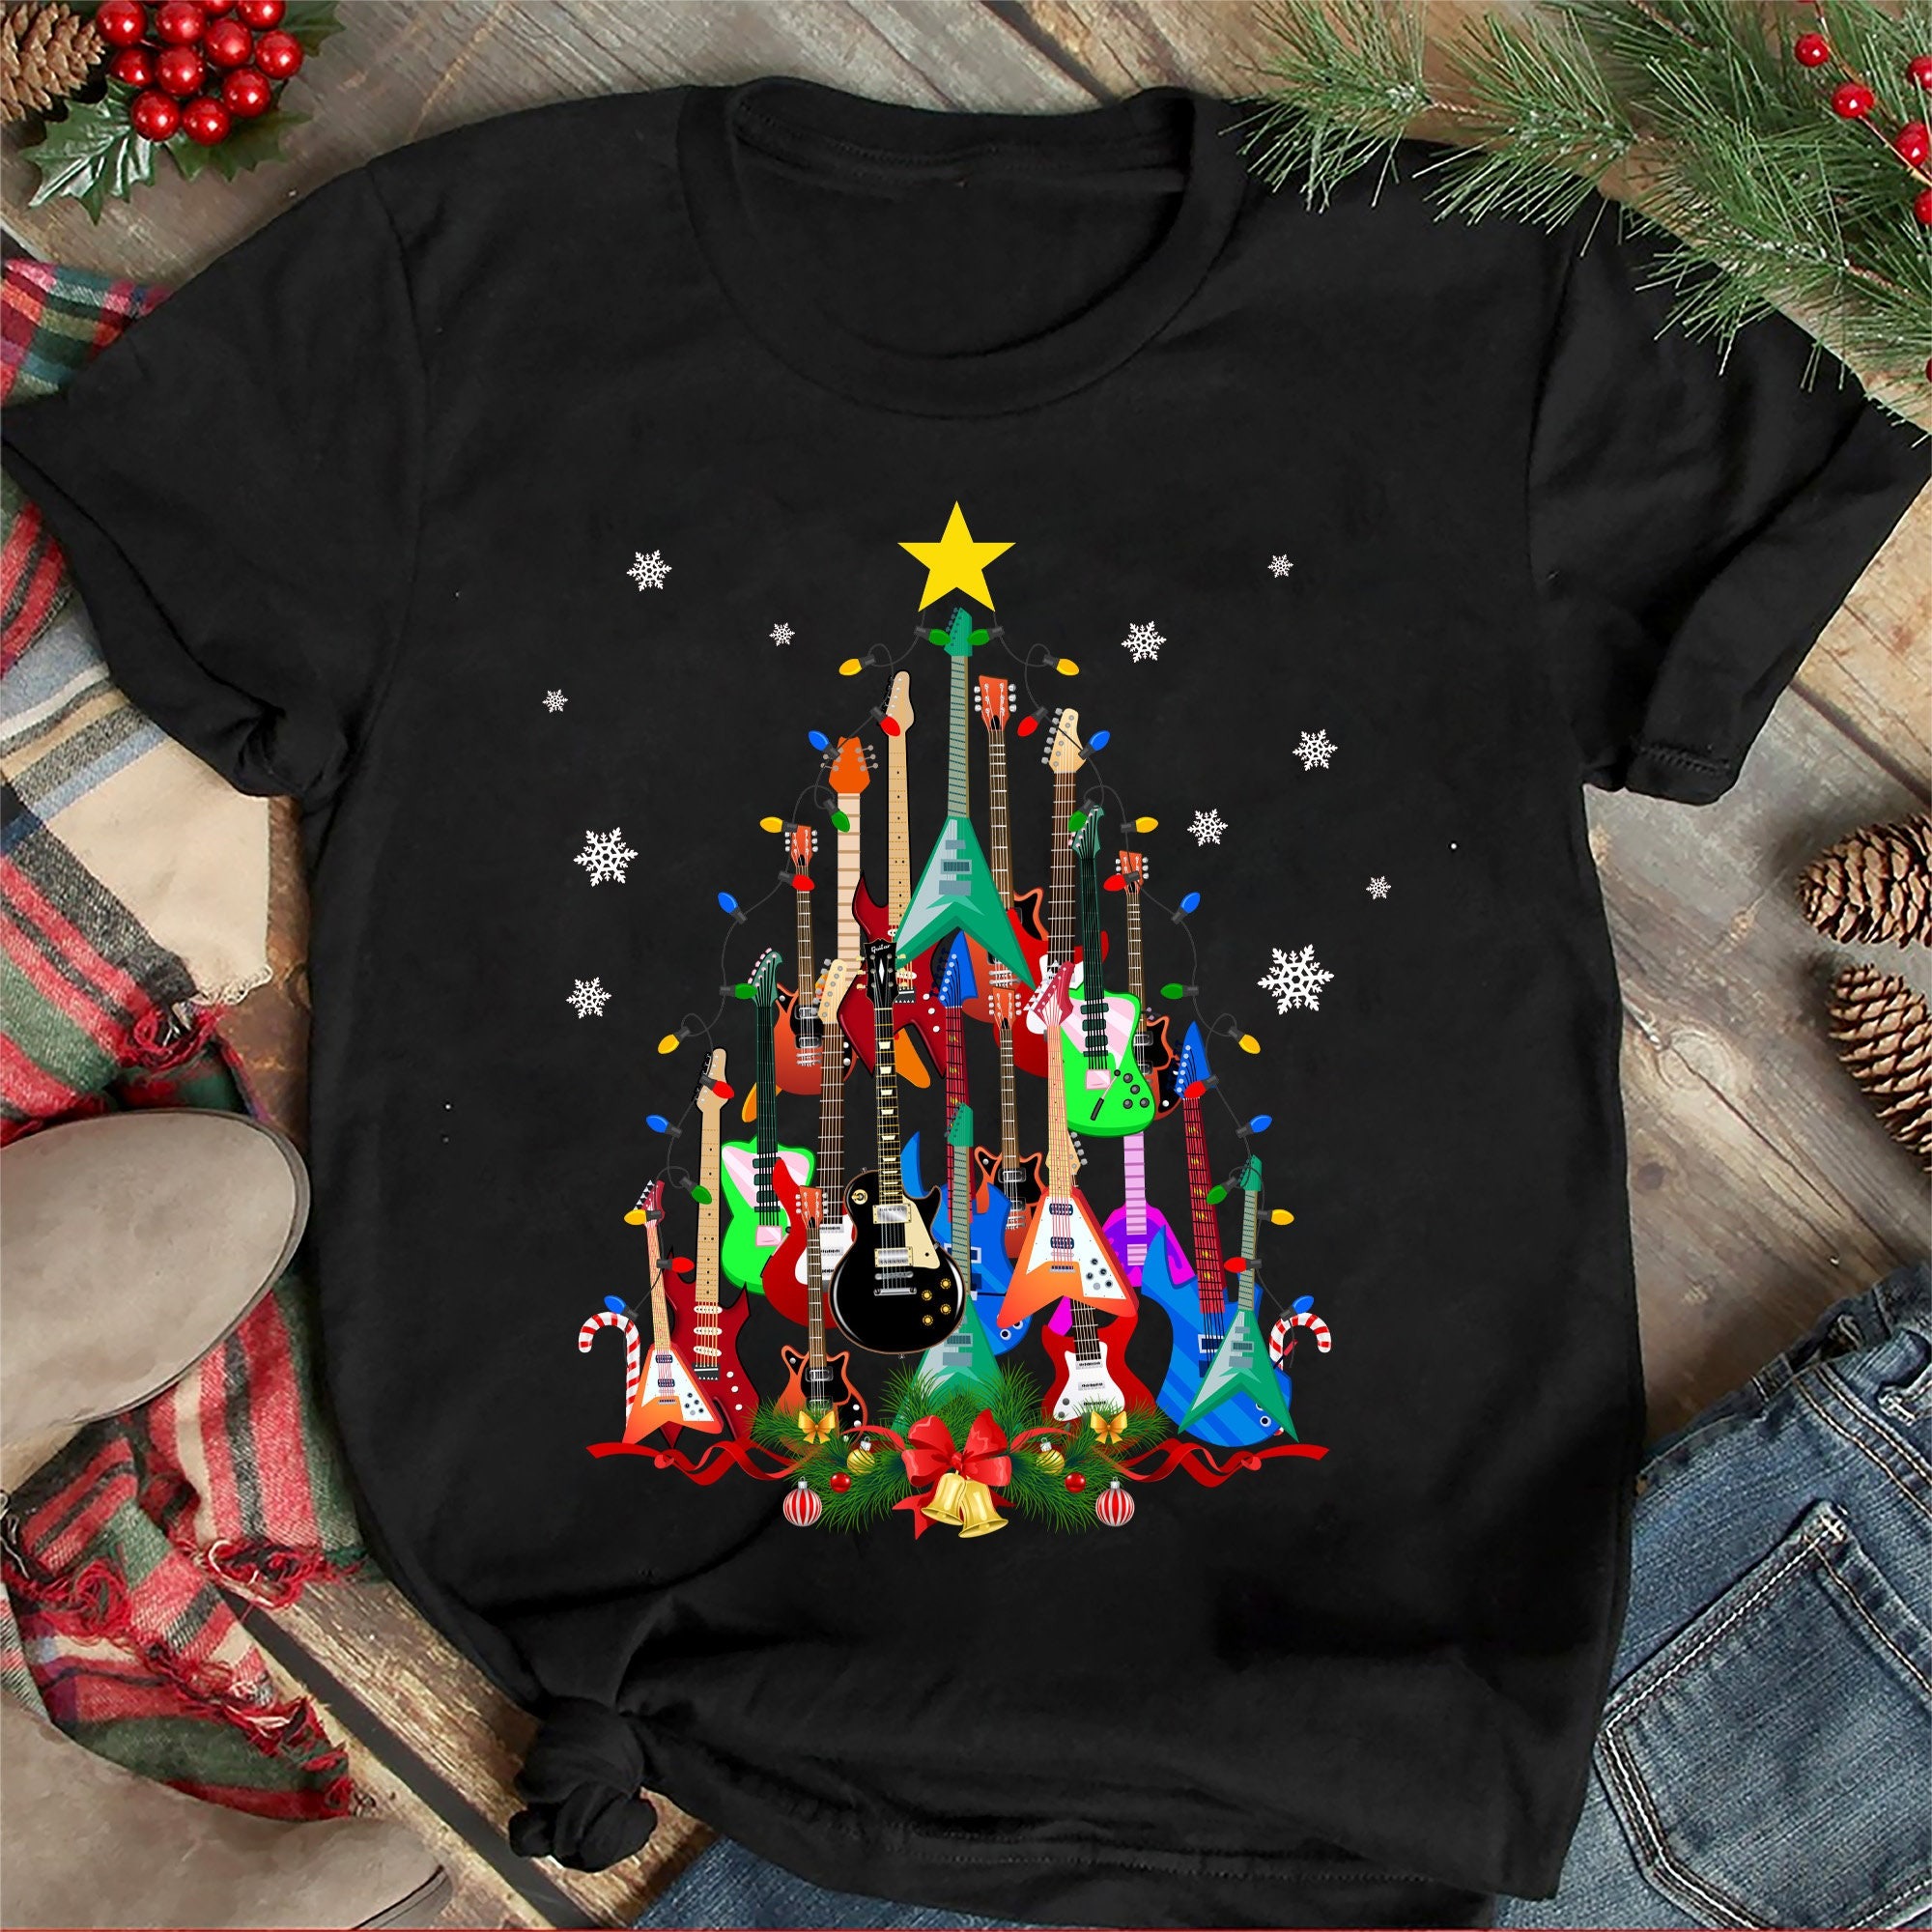 Funny Guitars Christmas Tree T-Shirt – Family Shirts Men, Woman Christmas T Shirts